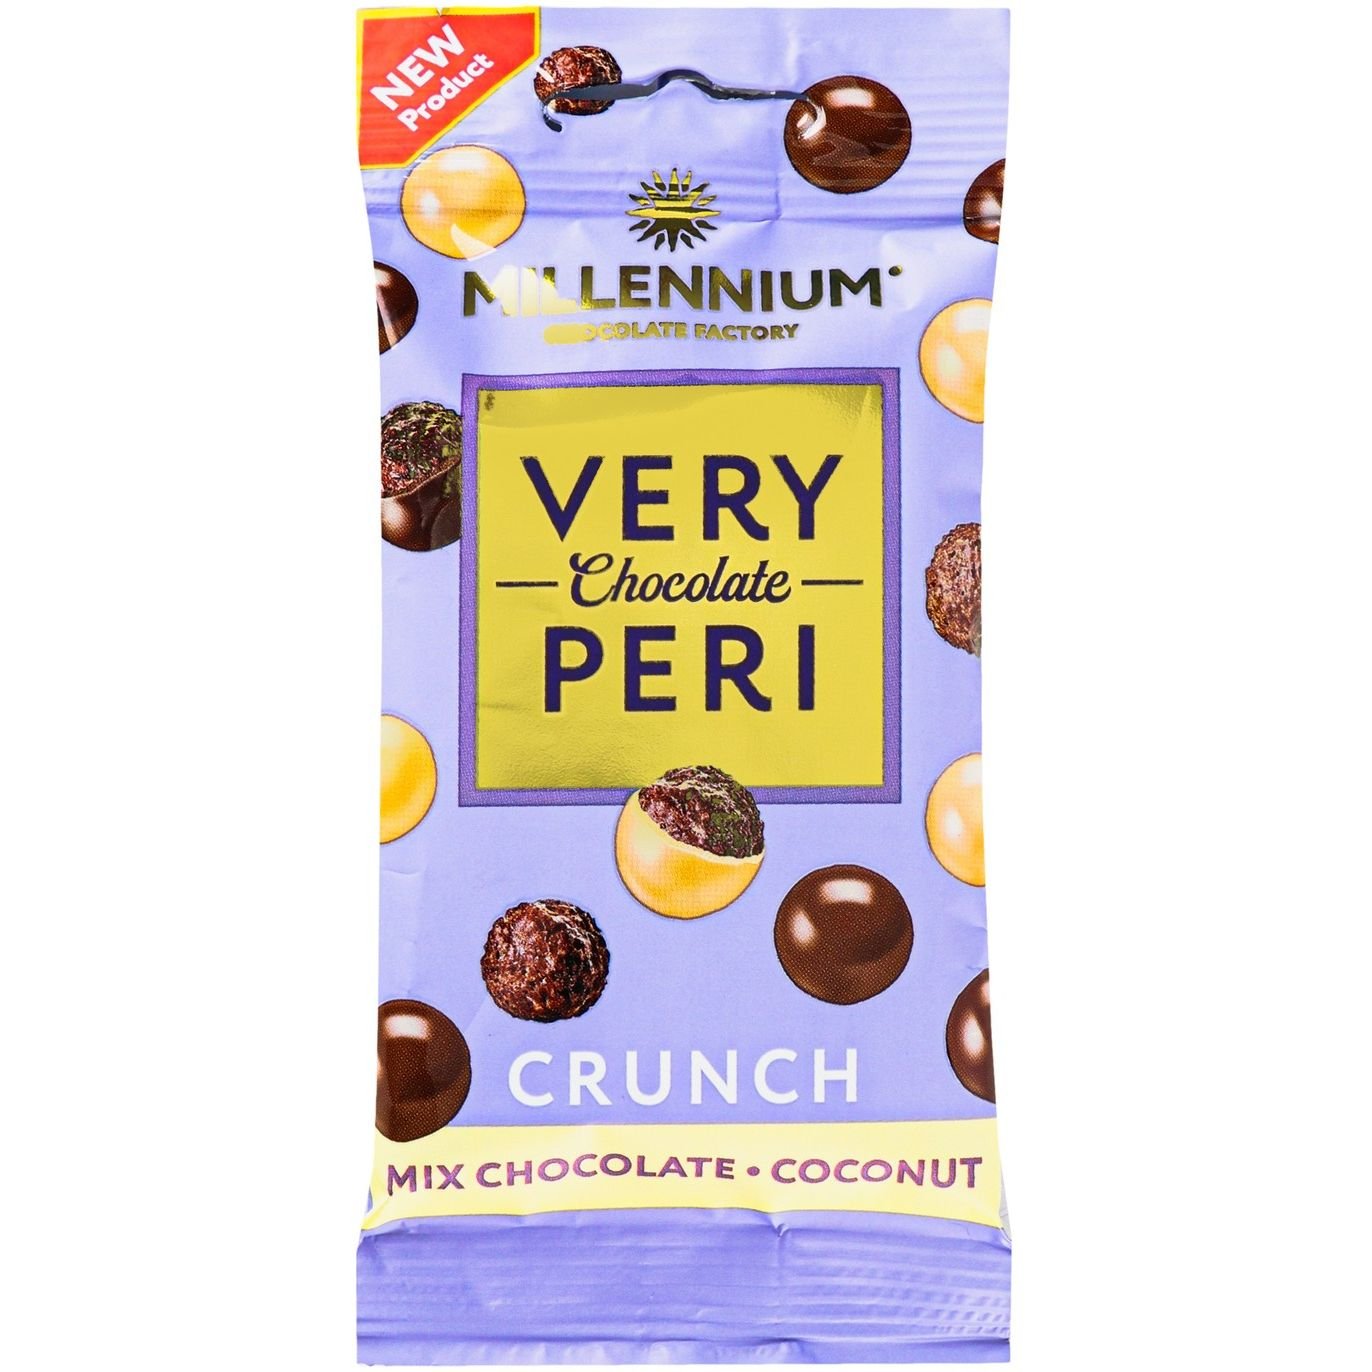 Драже Millennium Very Peri Crunch у шоколаді з кокосом 30 г (924029) - фото 1